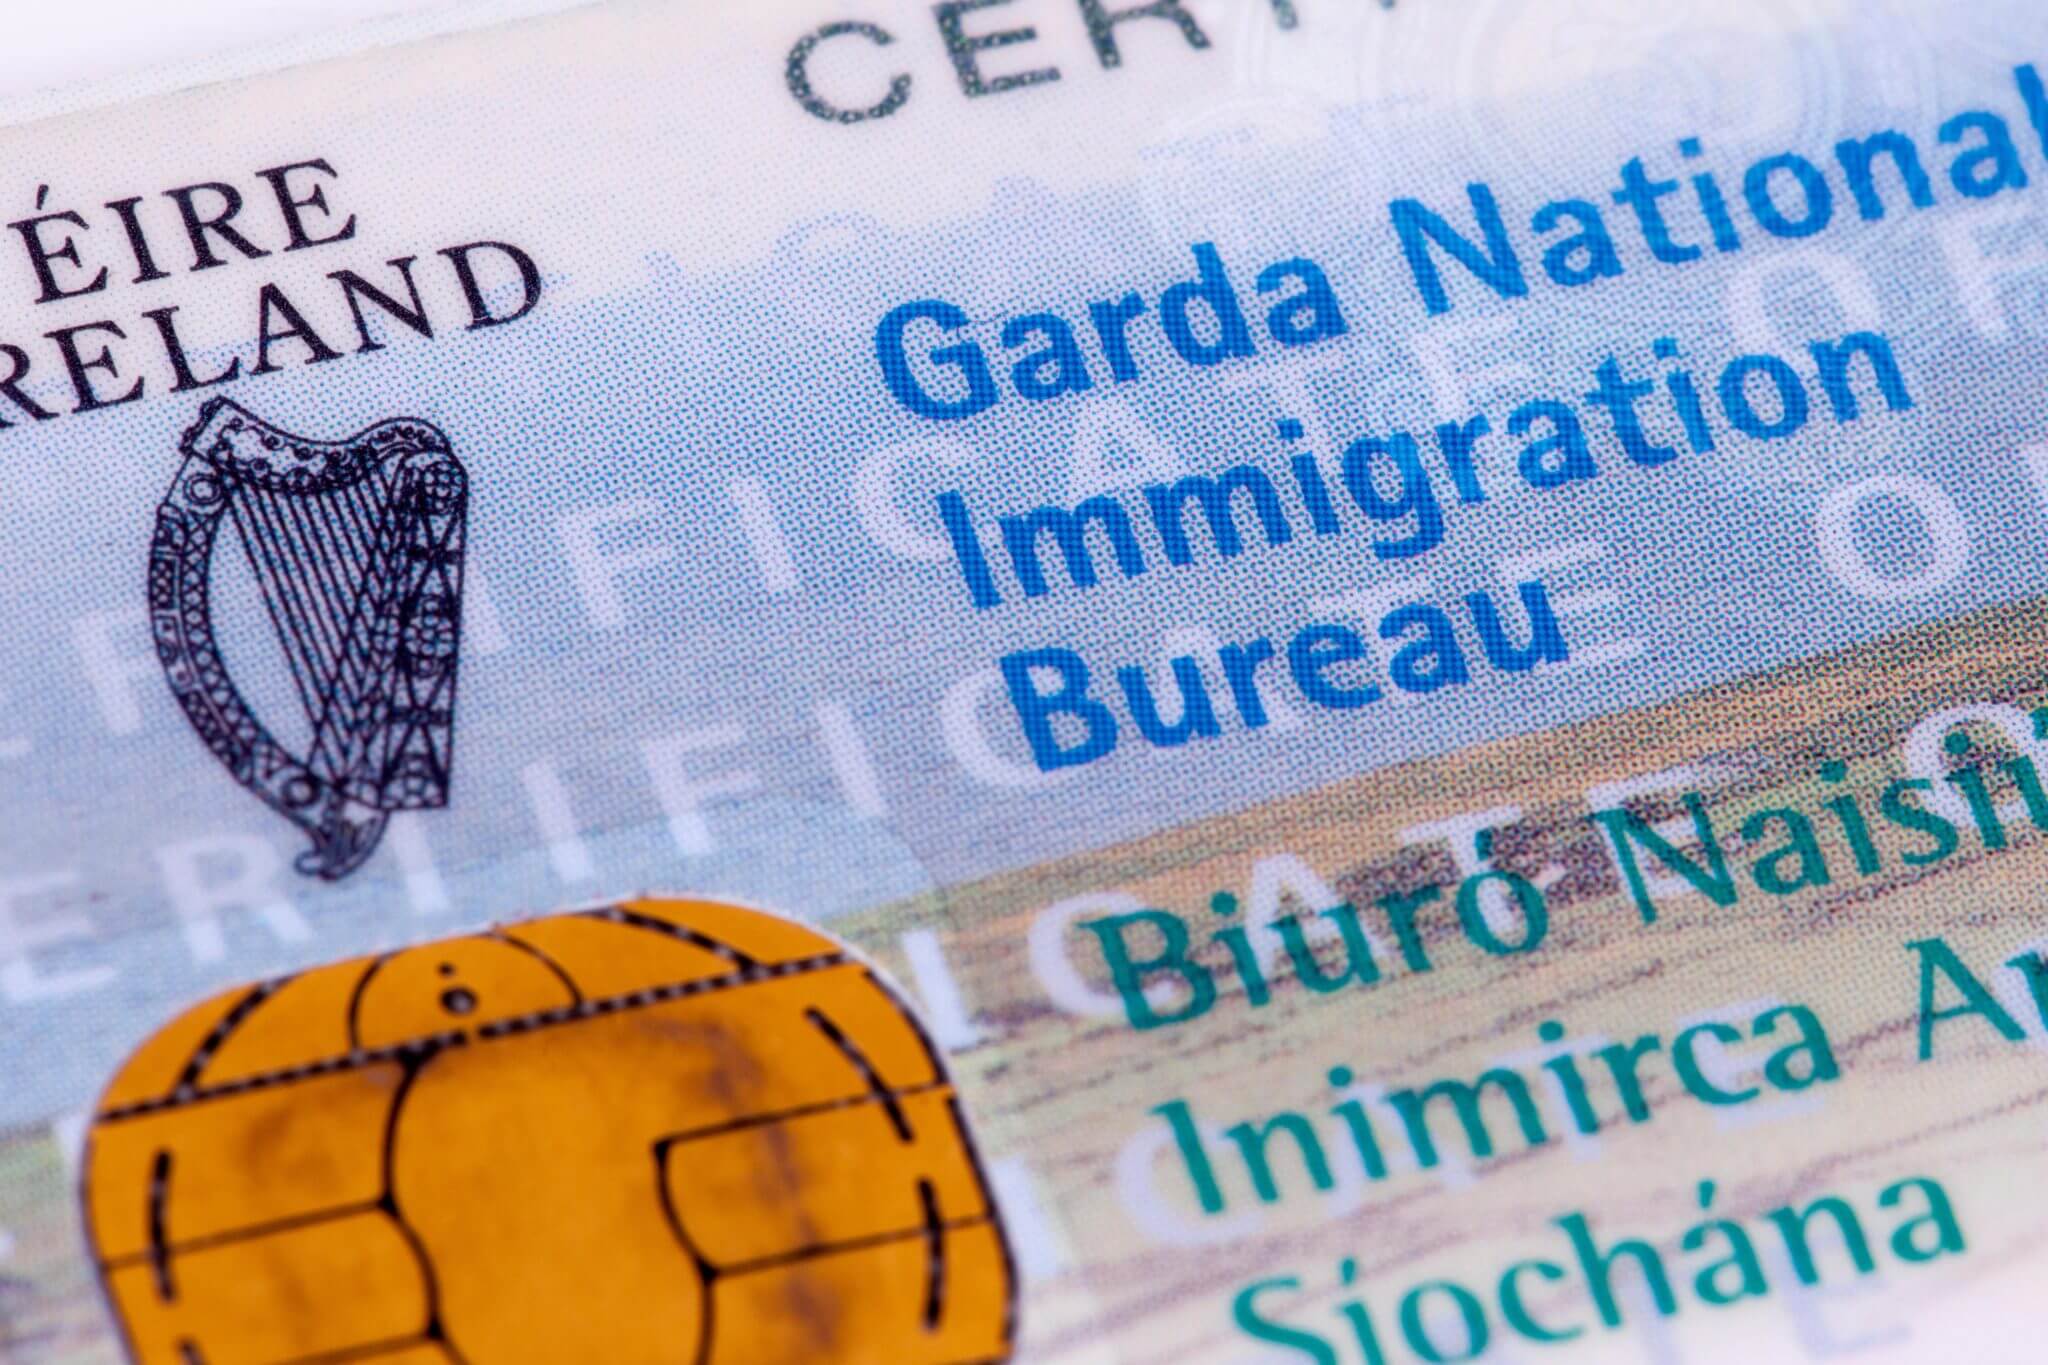 Studant Visa Ireland Imigration